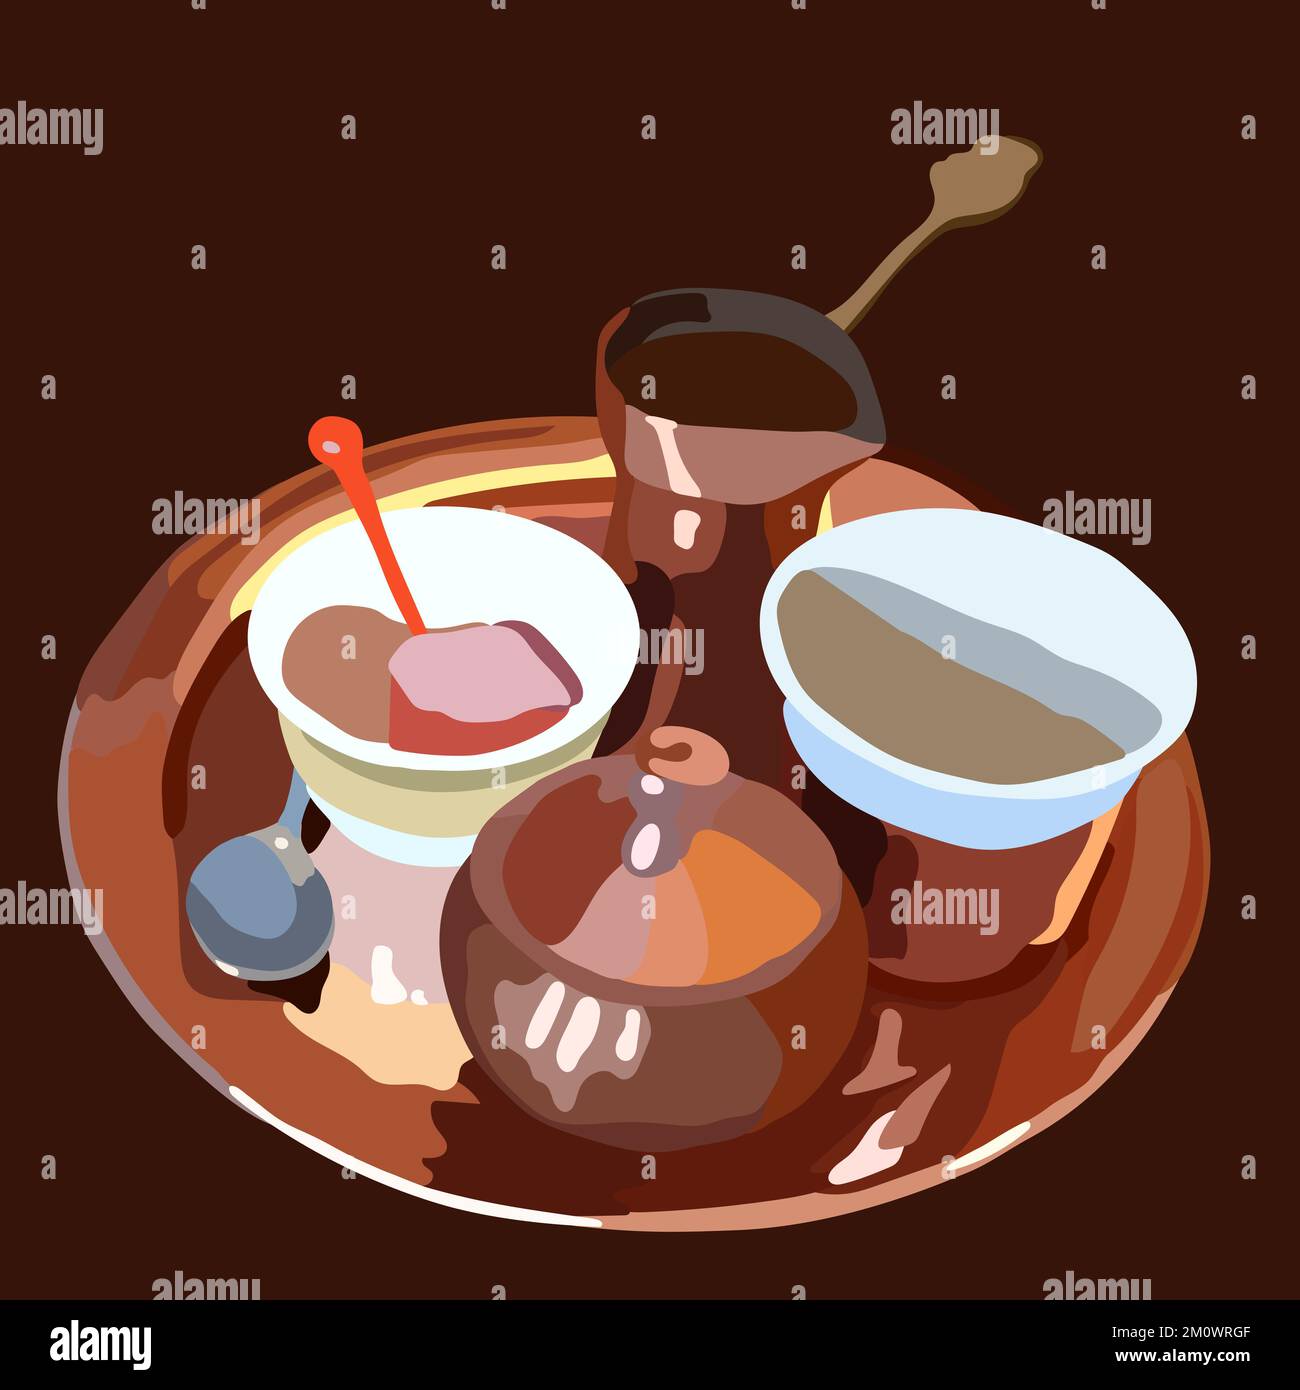 Turkish coffee serving with rahat lokum illustration Stock Vector